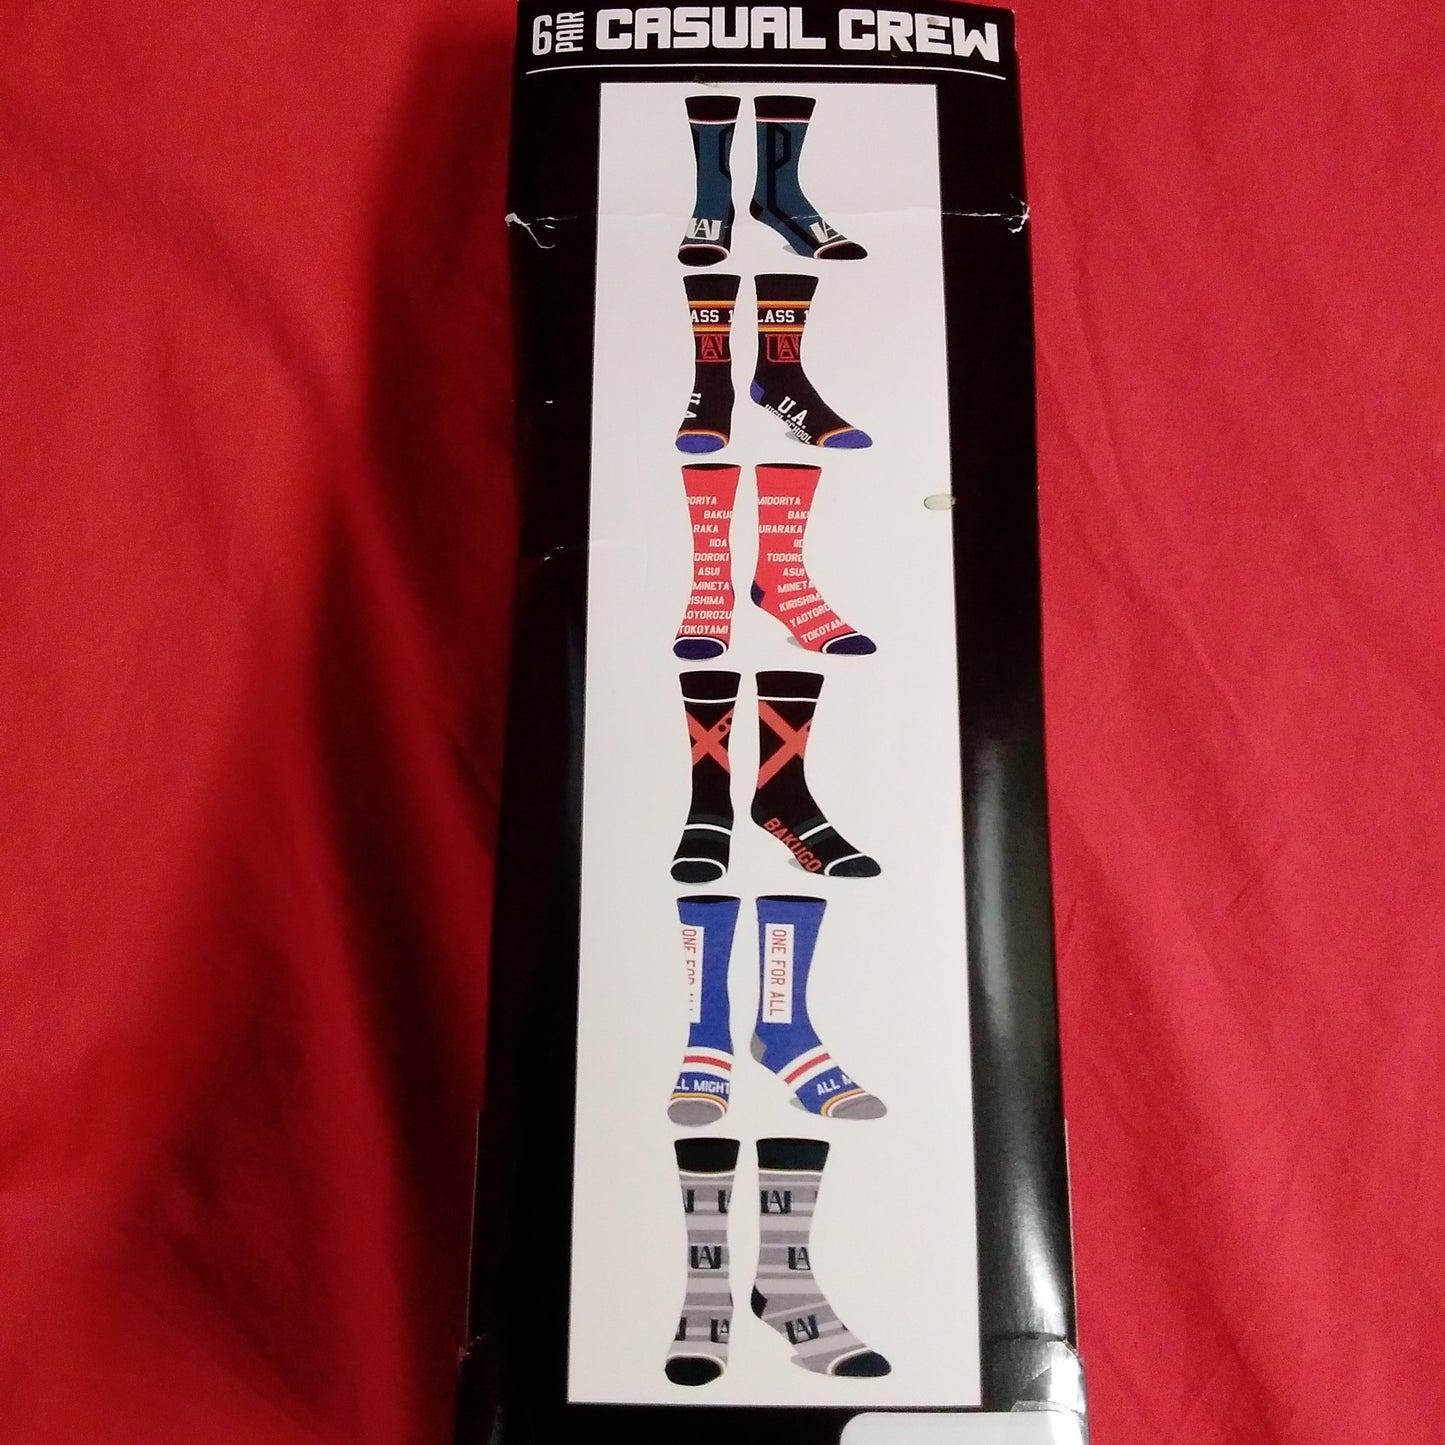 NIB - My Hero Academia Casual Crew Socks 6-Pair - Fits shoe size: 8-10